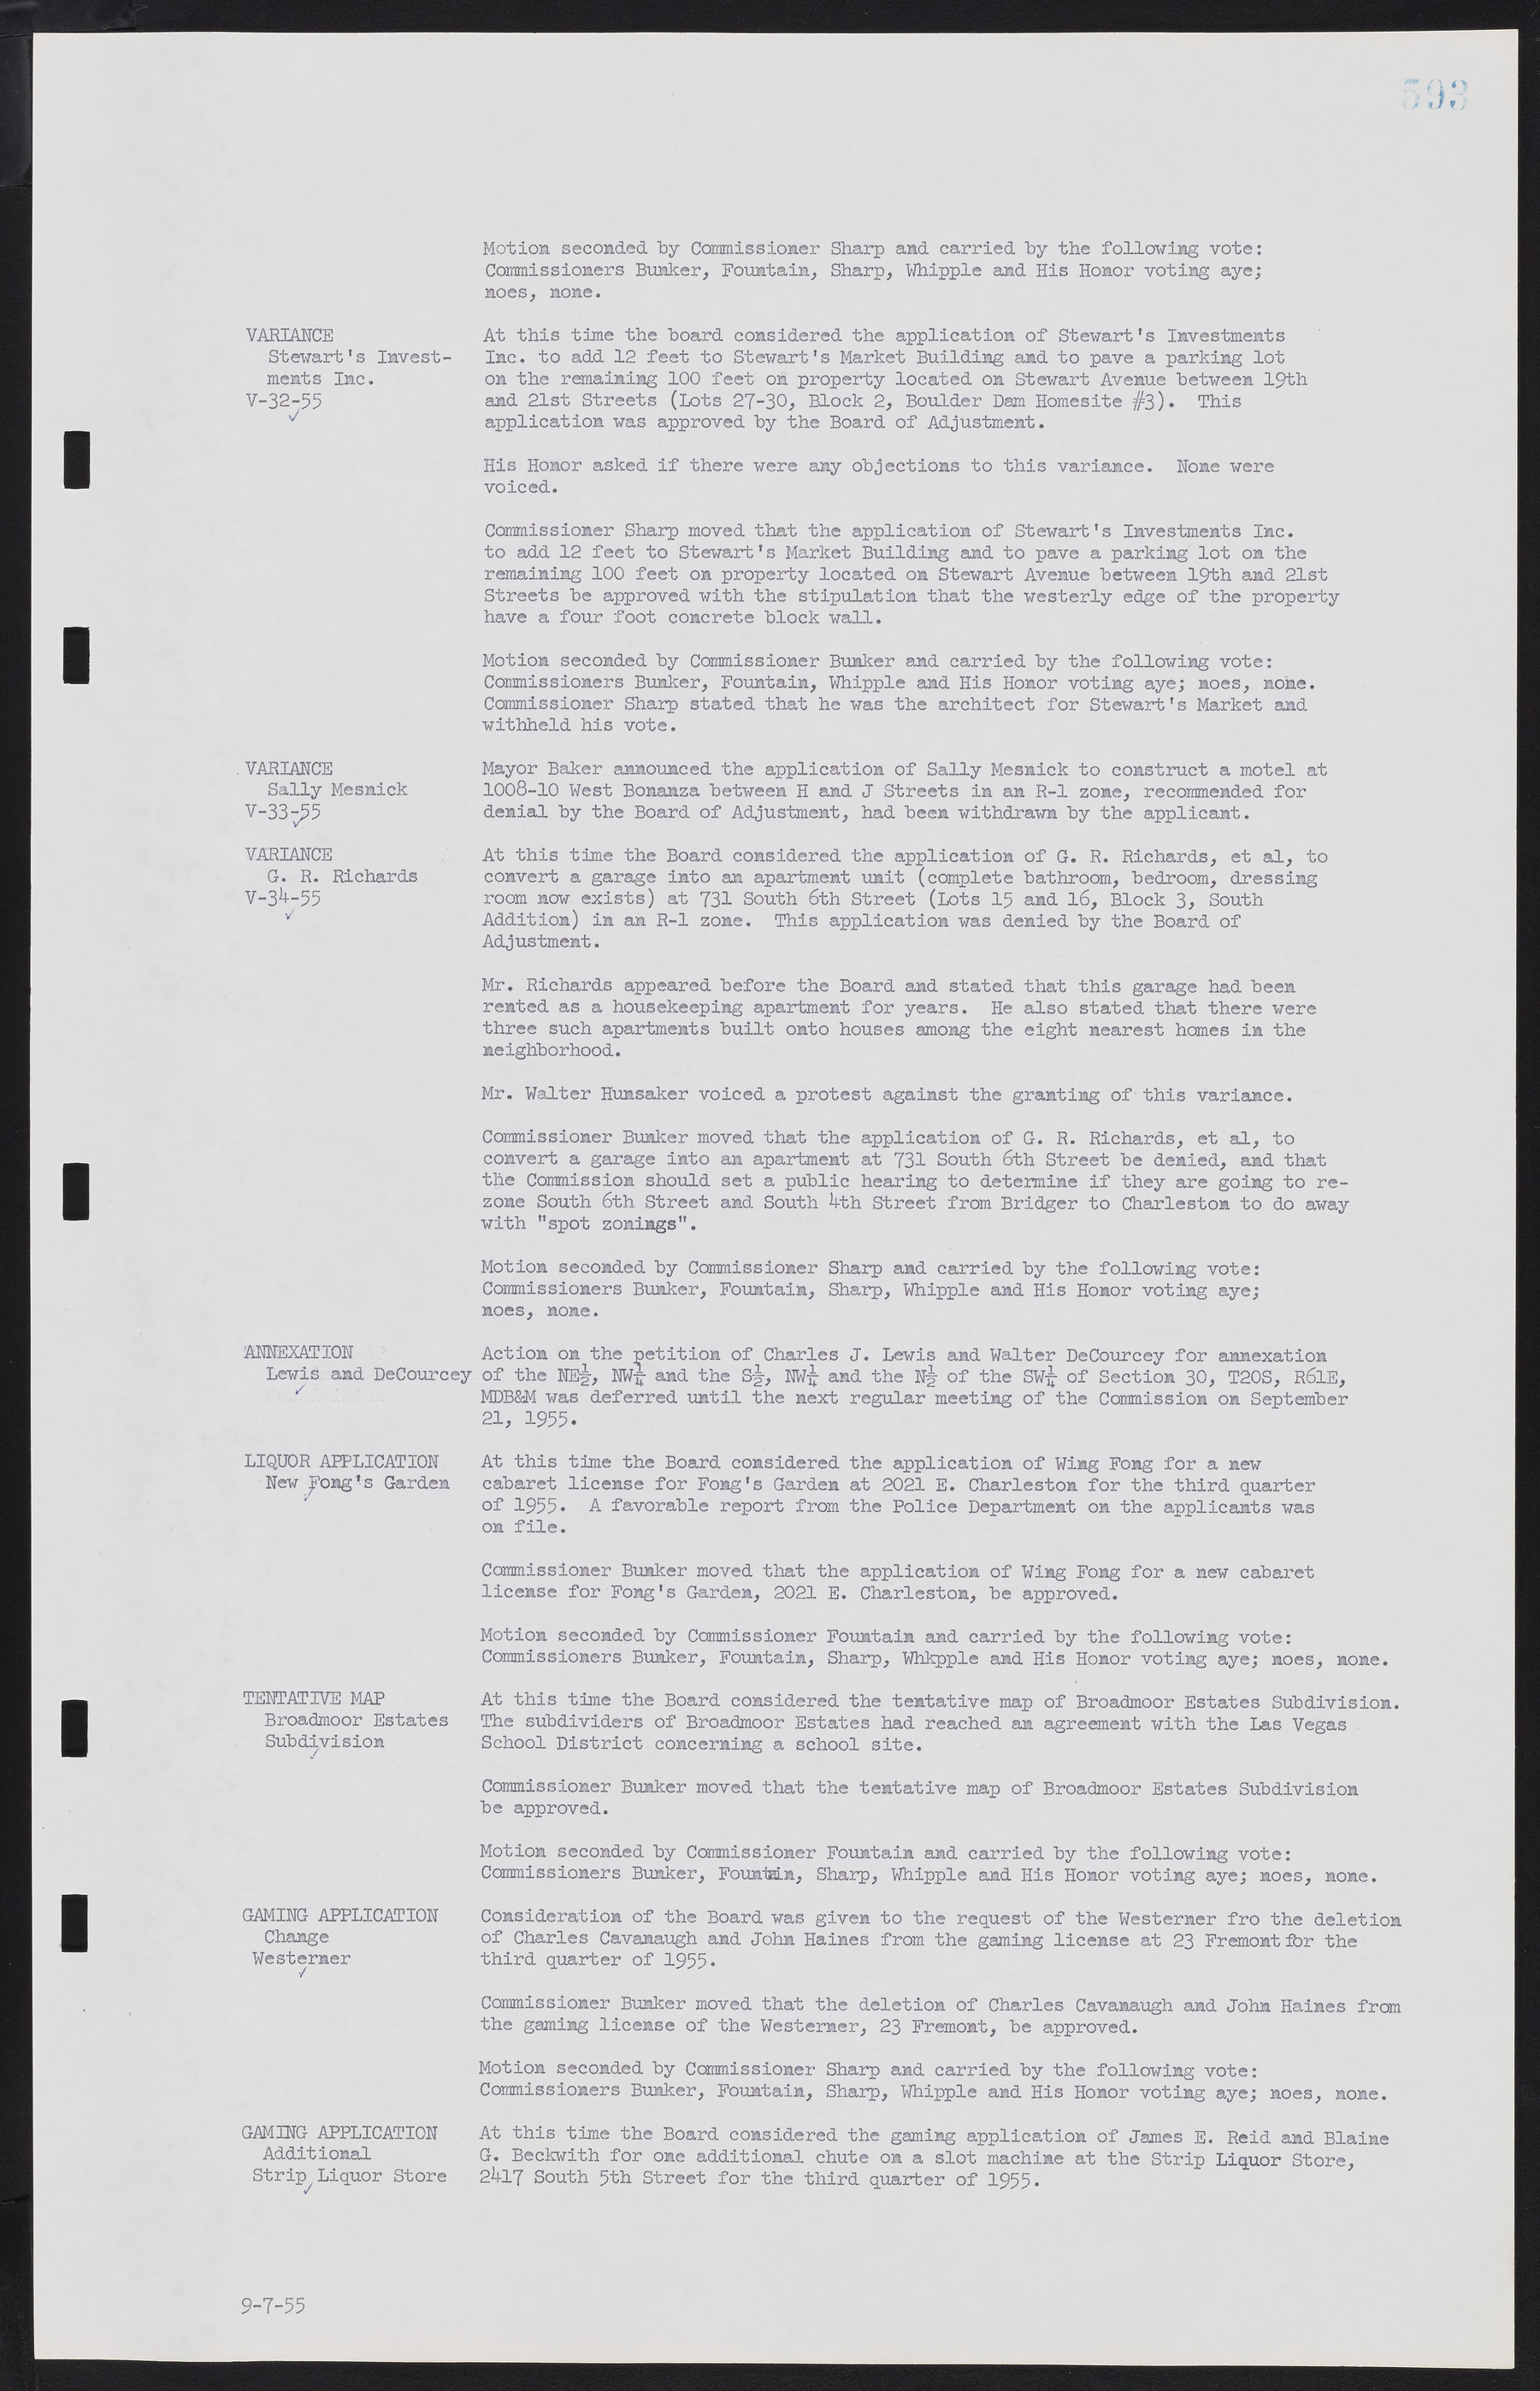 Las Vegas City Commission Minutes, February 17, 1954 to September 21, 1955, lvc000009-599